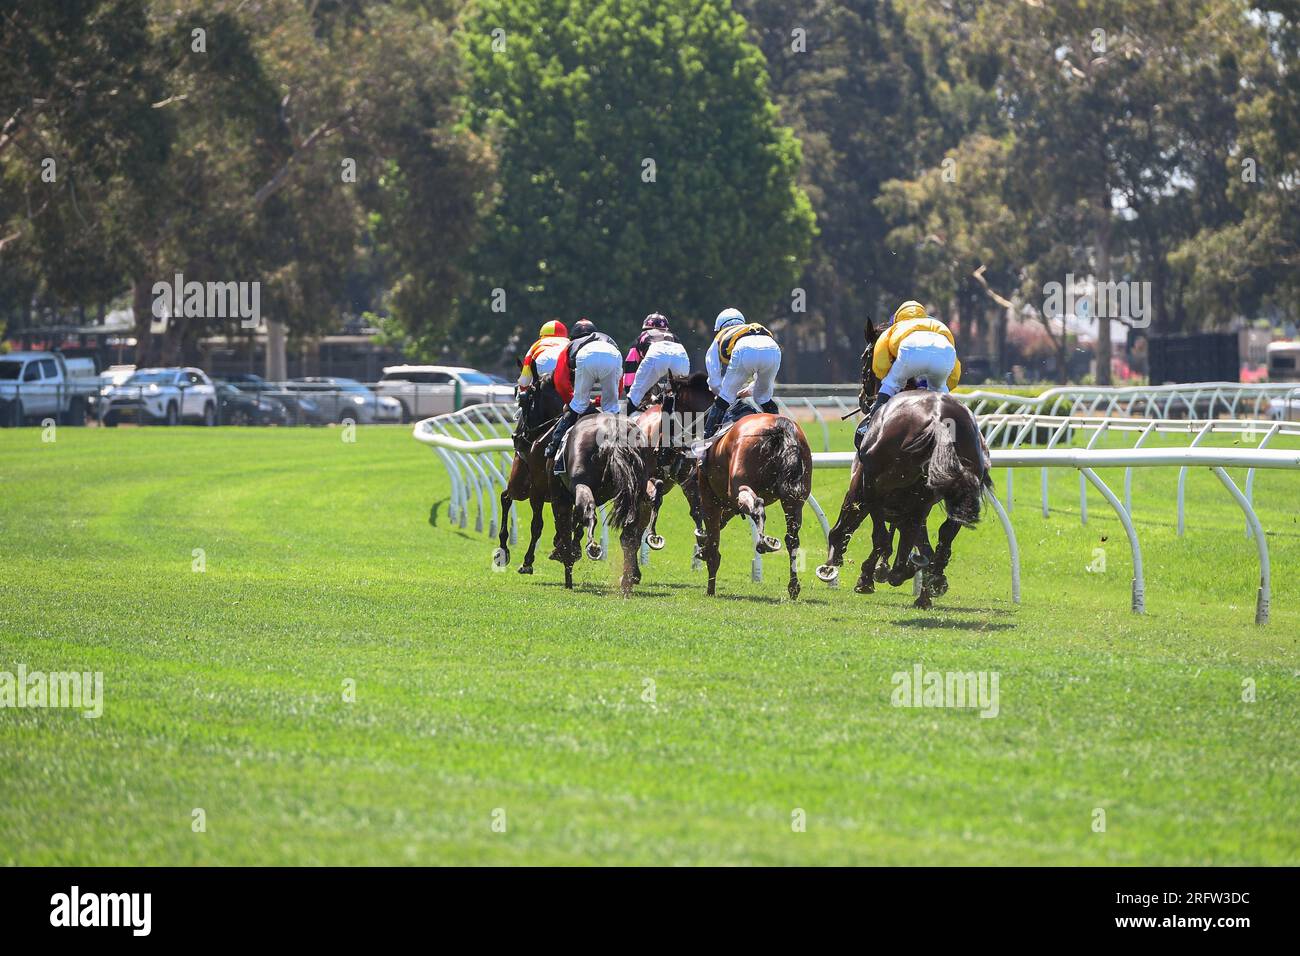 Horse racing in Australia. Horses with jockeys running towards finish line. Stock Photo